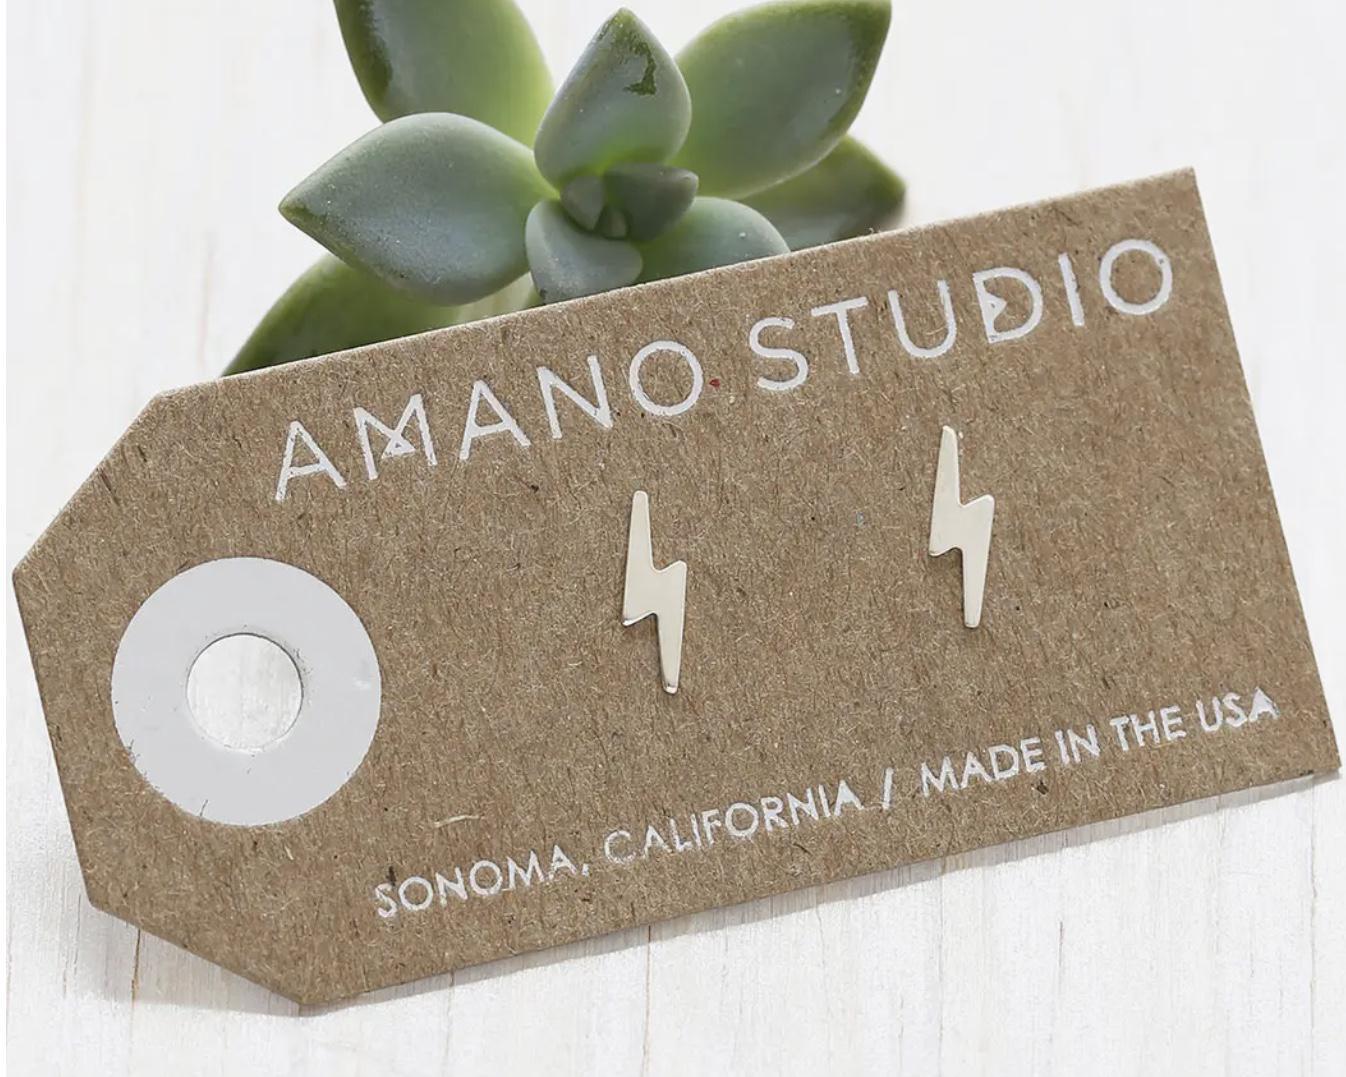 Amano Studio Lightning Bolt Studs in Silver